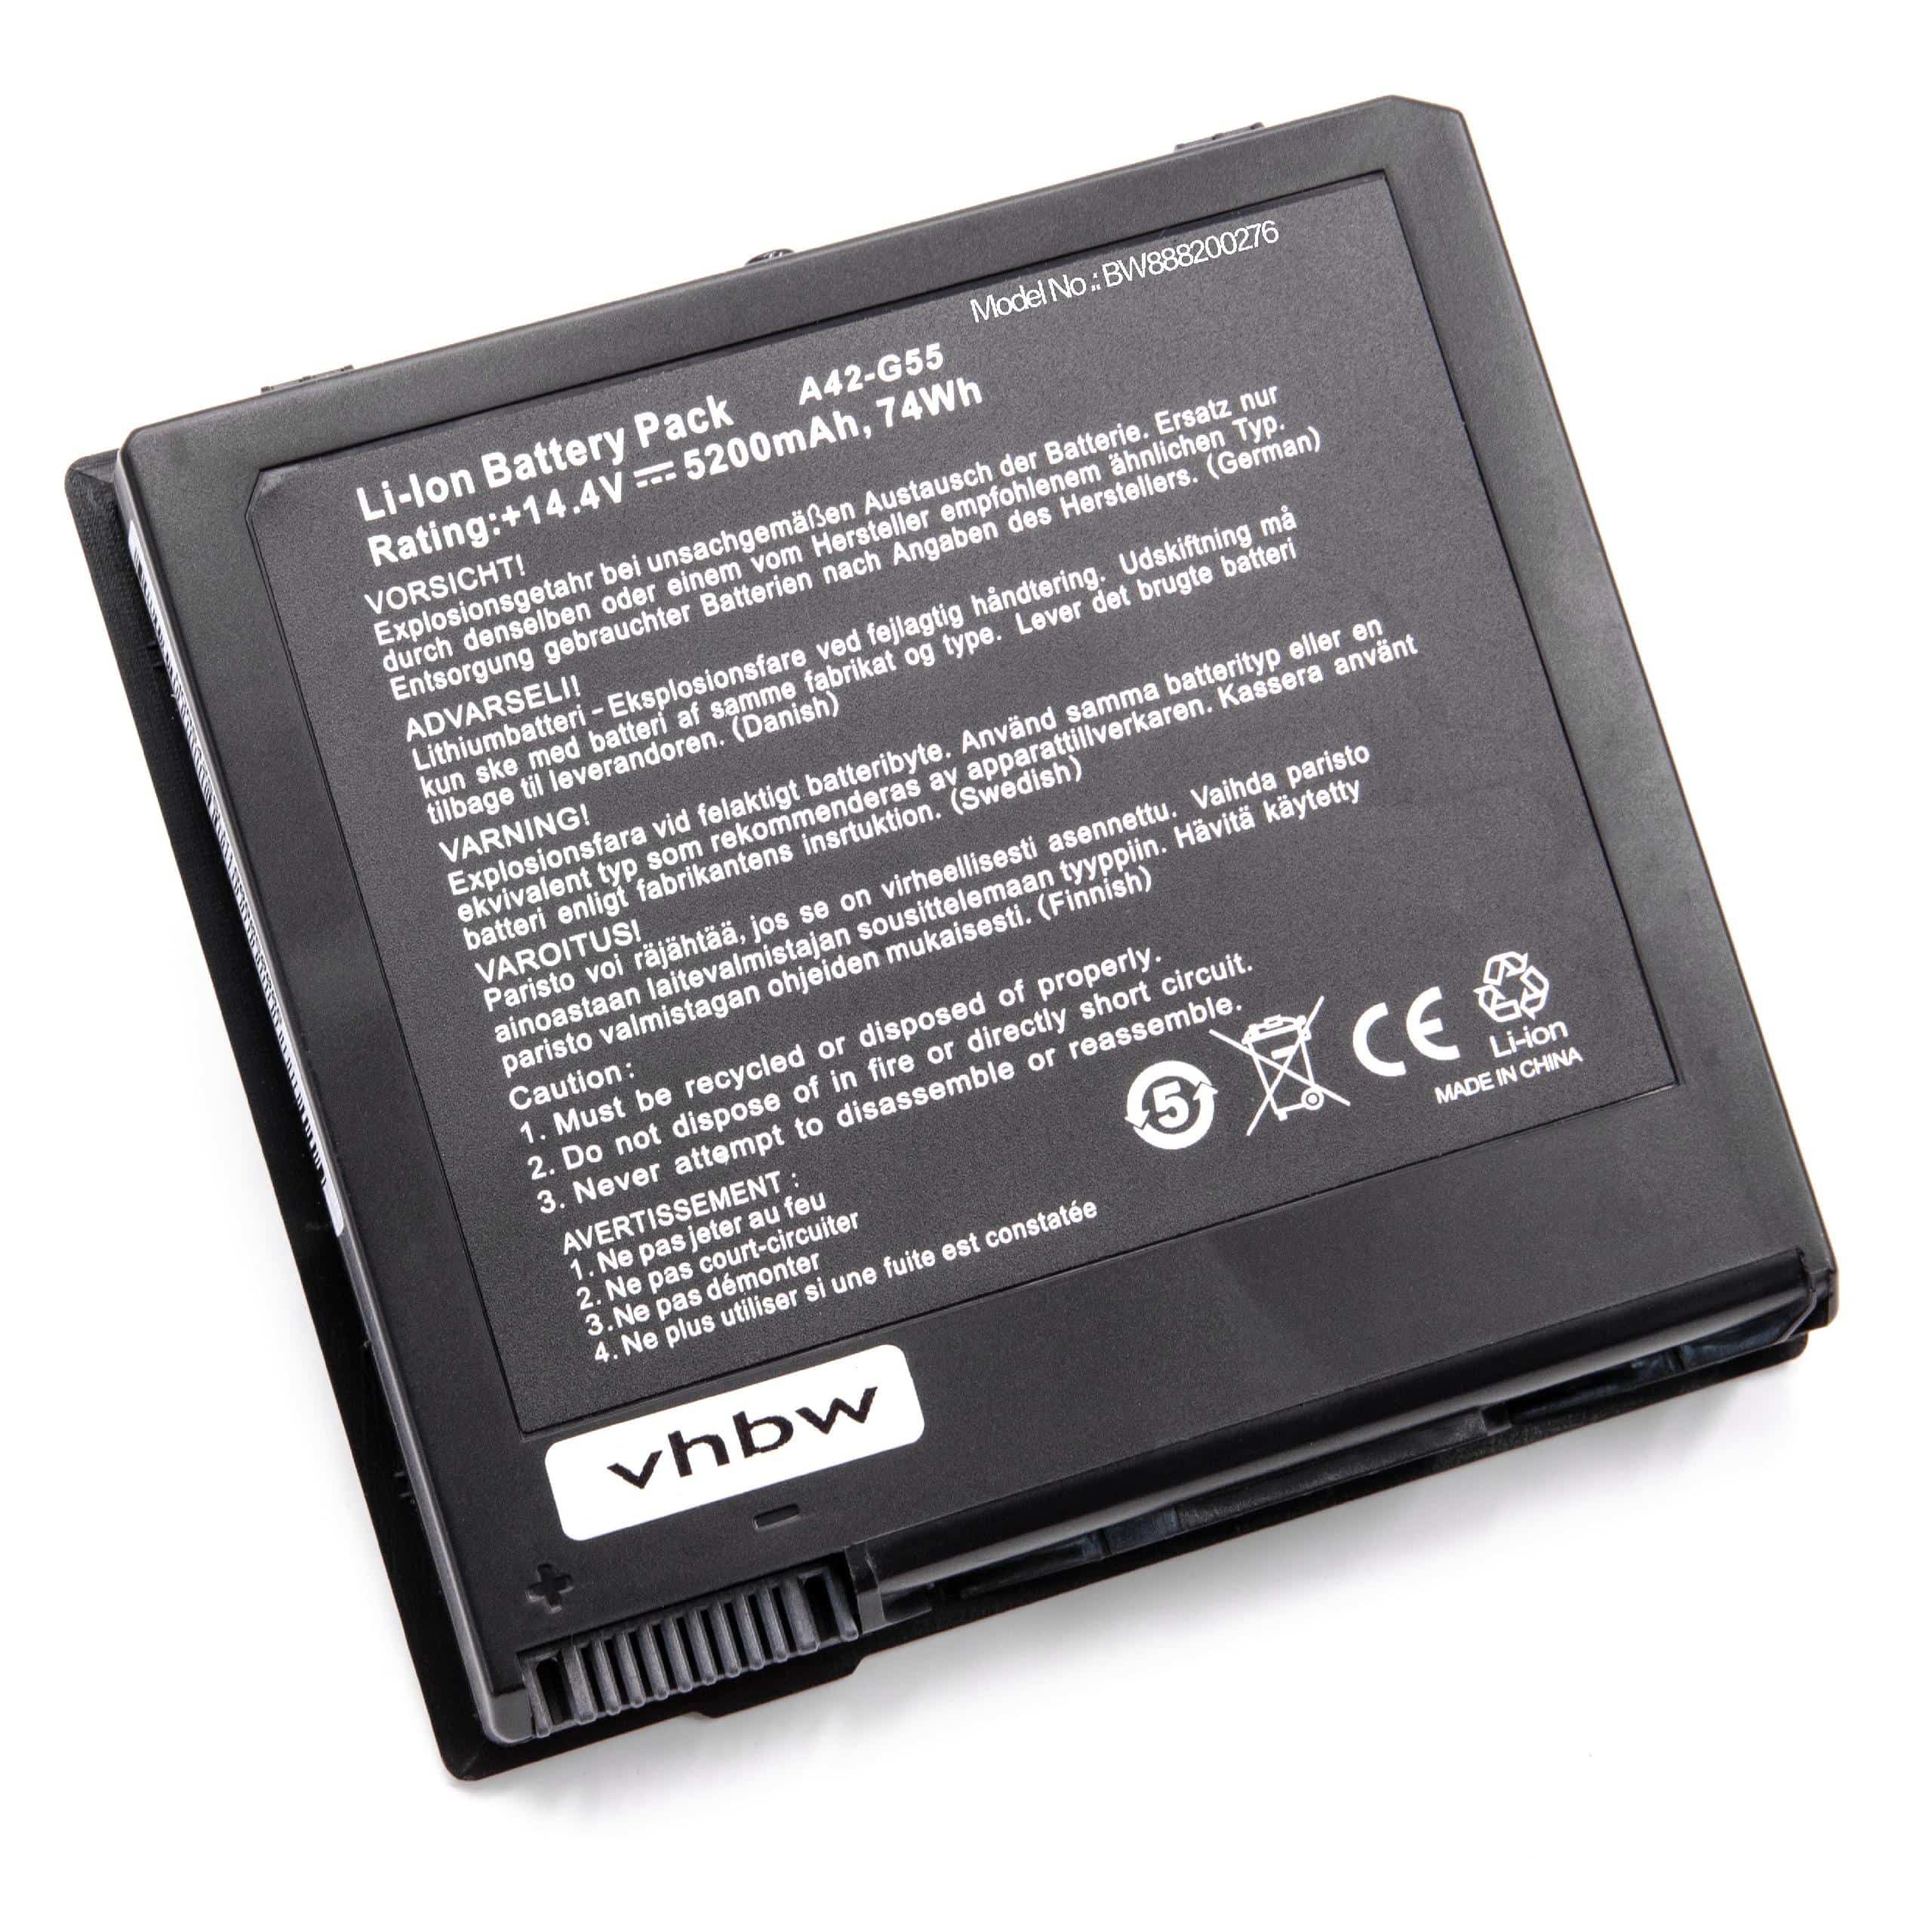 Akumulator do laptopa zamiennik Asus 0B110-00080000, A42-G55, B056R014-0037 - 5200 mAh 14,4 V Li-Ion, czarny